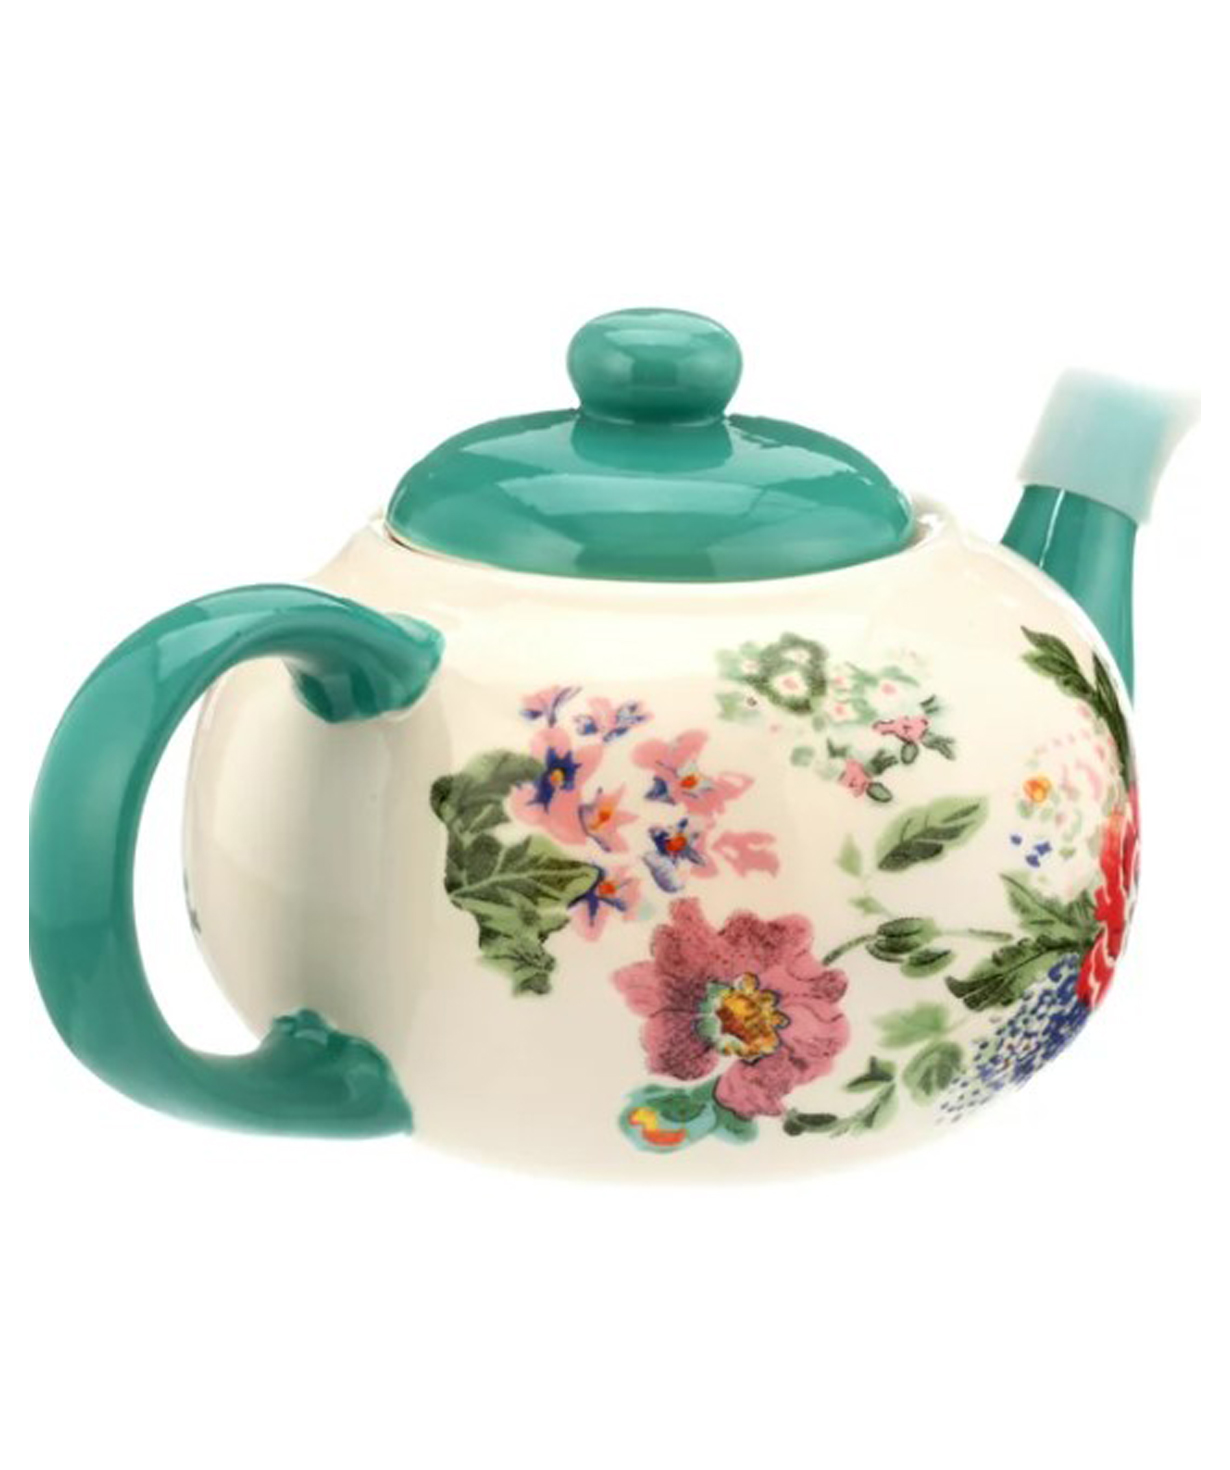 USA. Teapot №150